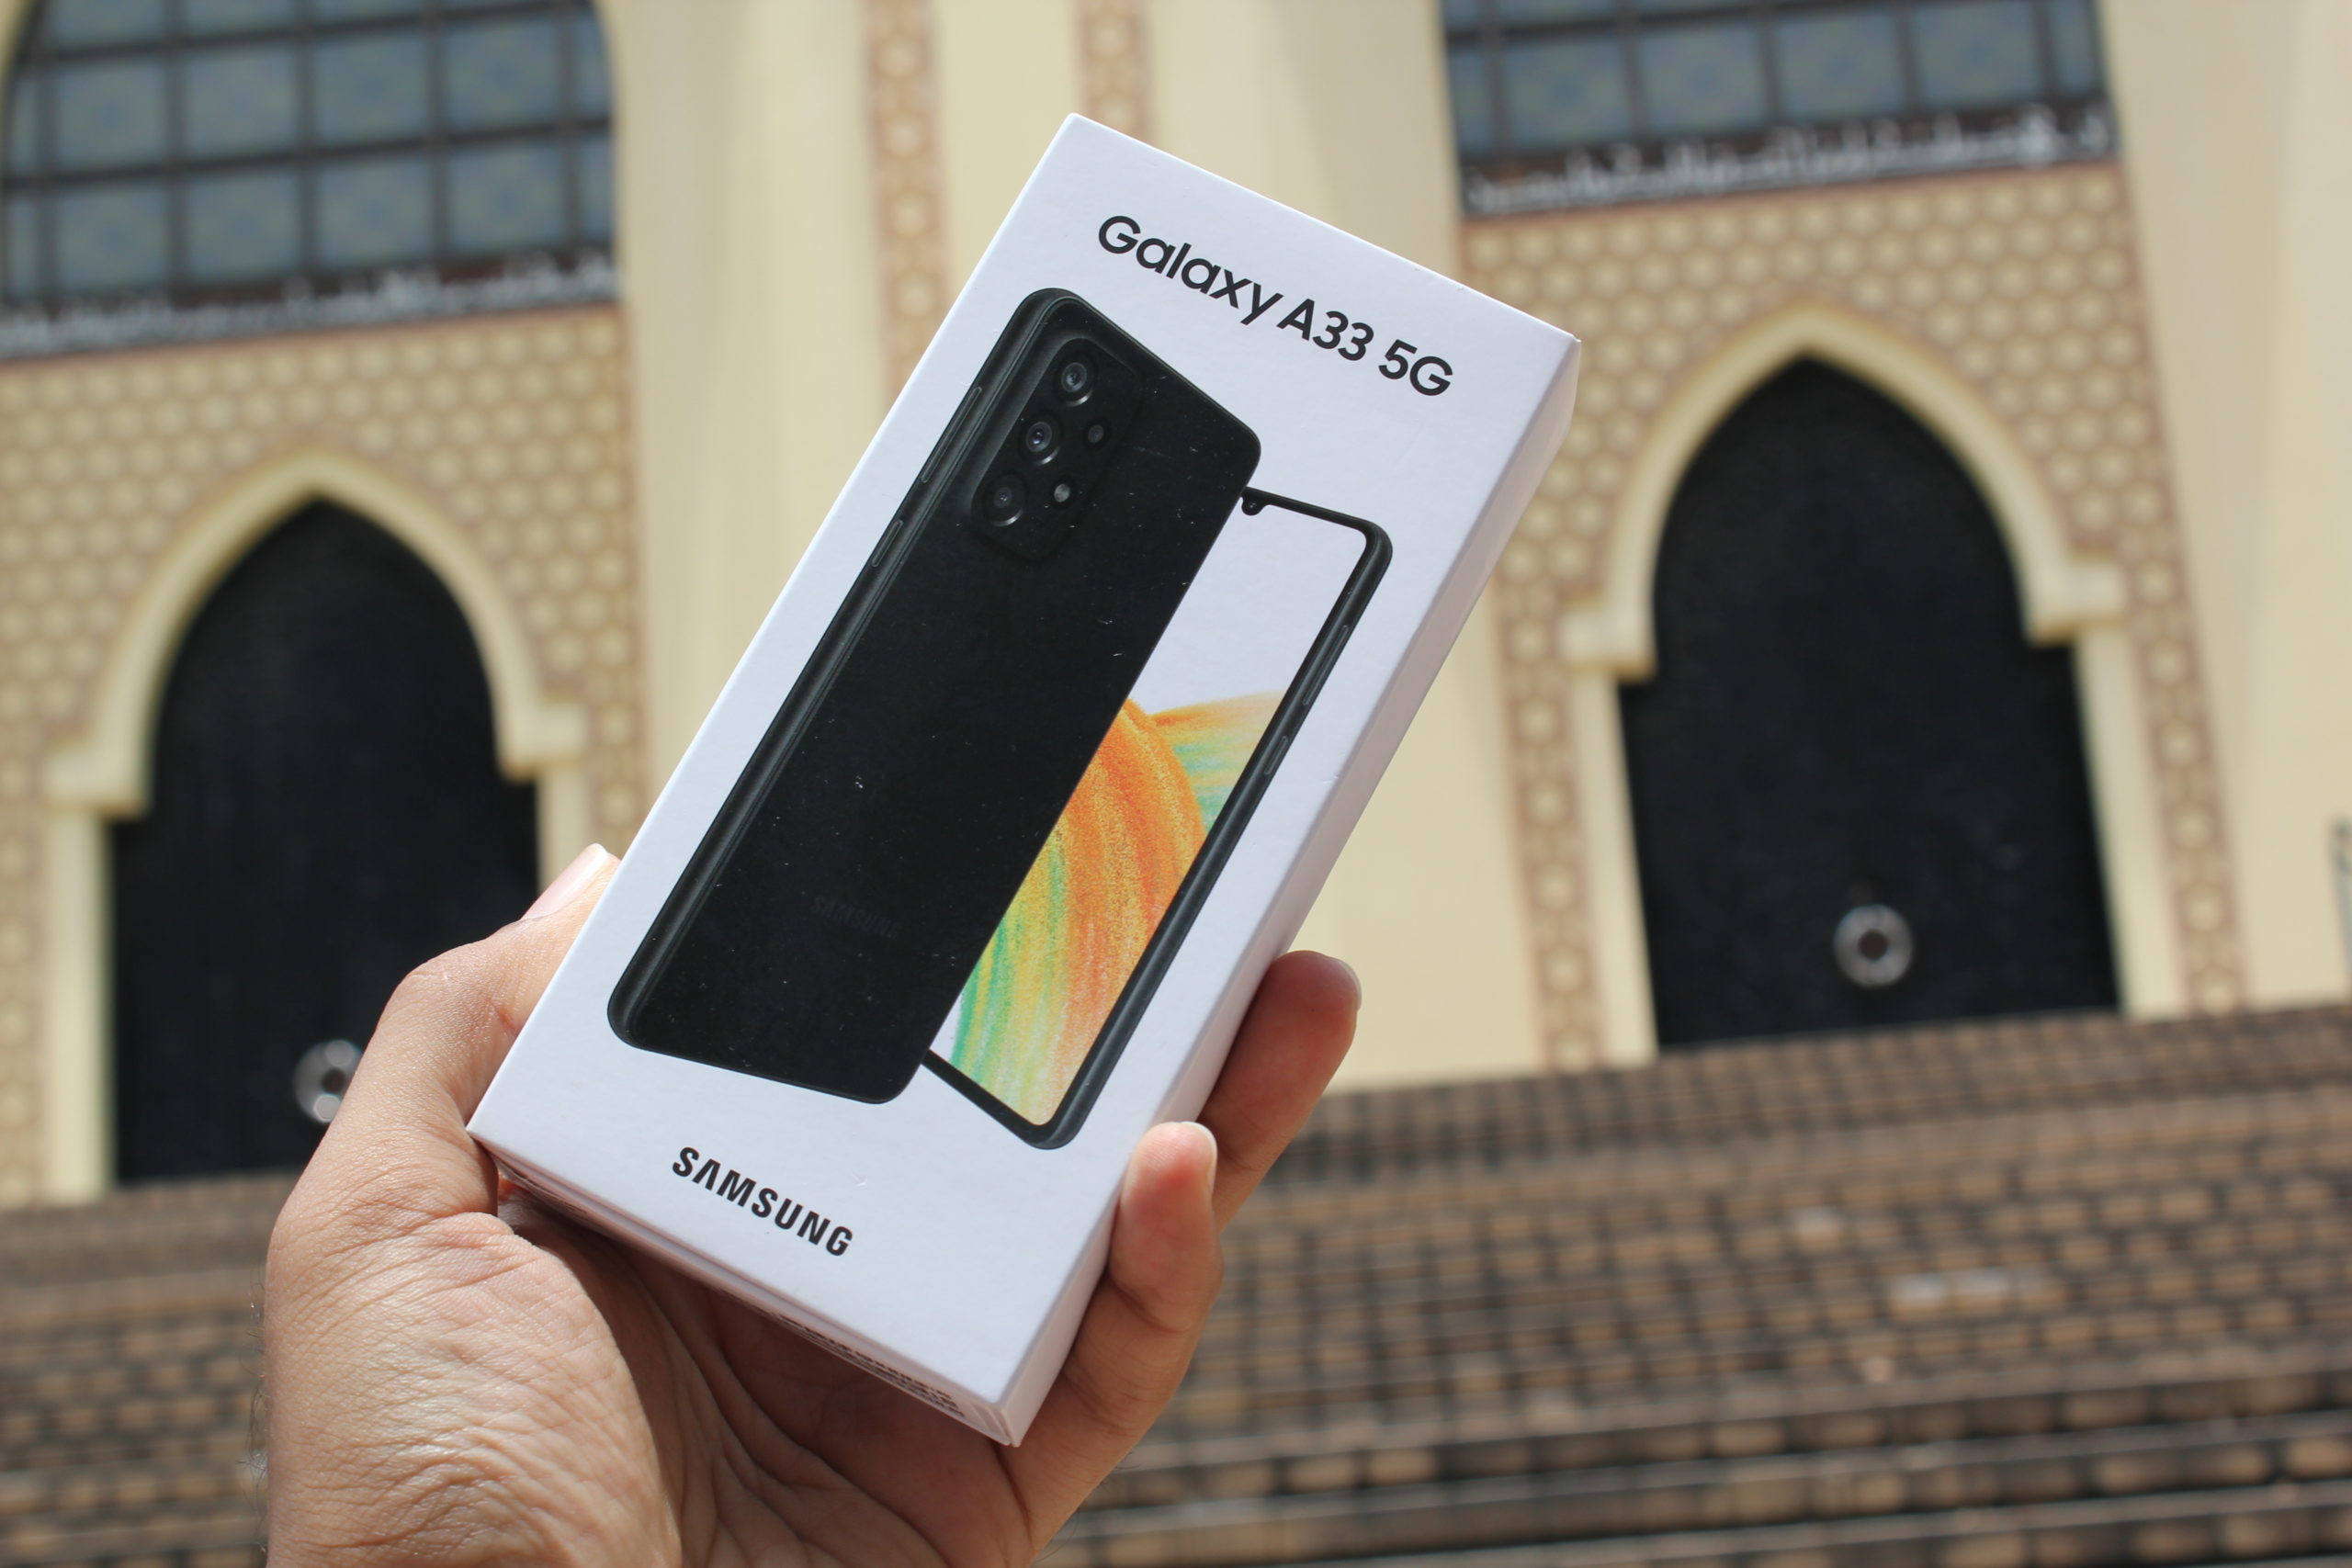 Pandang Pertama : Samsung Galaxy A33 5G - Galaxy A Series termurah pada harga 1,499 11